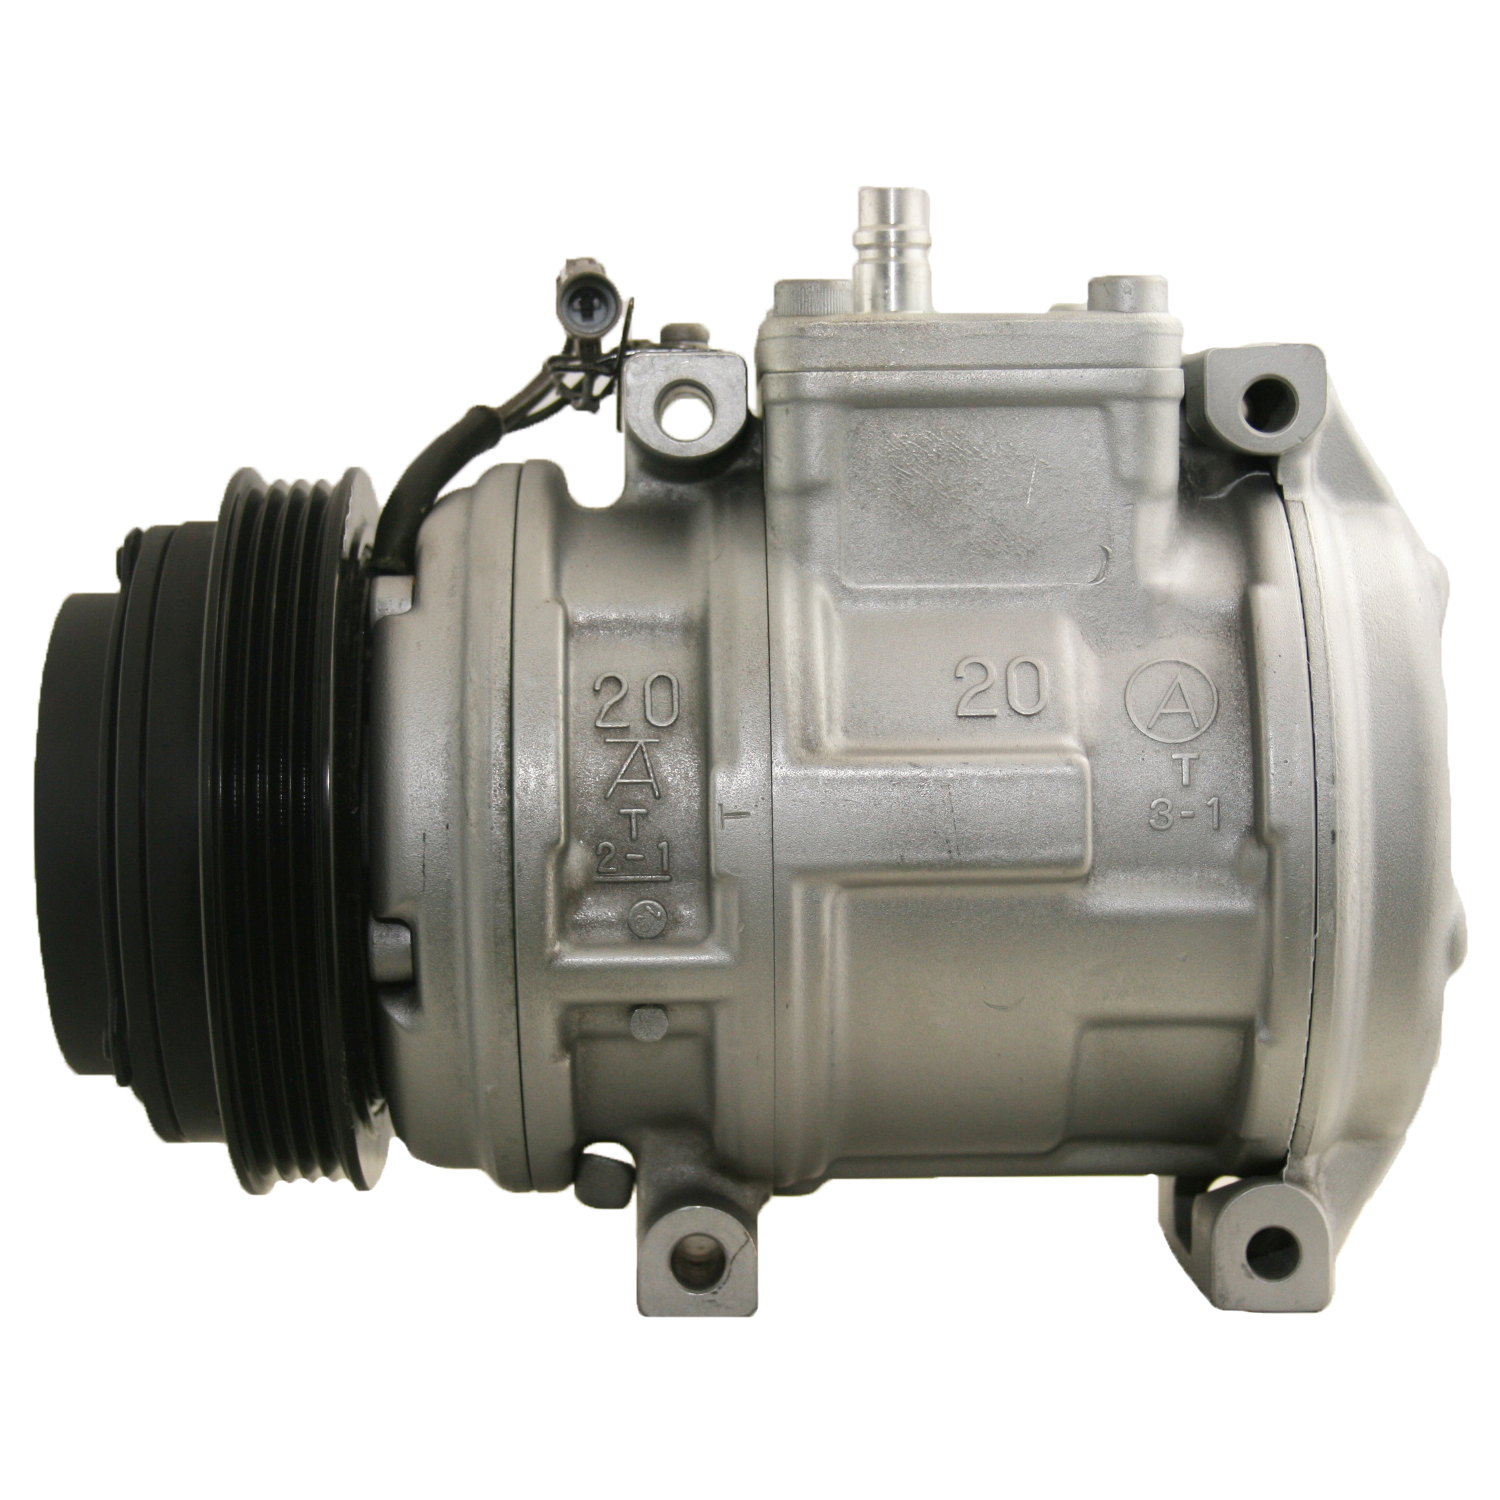 TCW Compressor 31340.401 Remanufactured